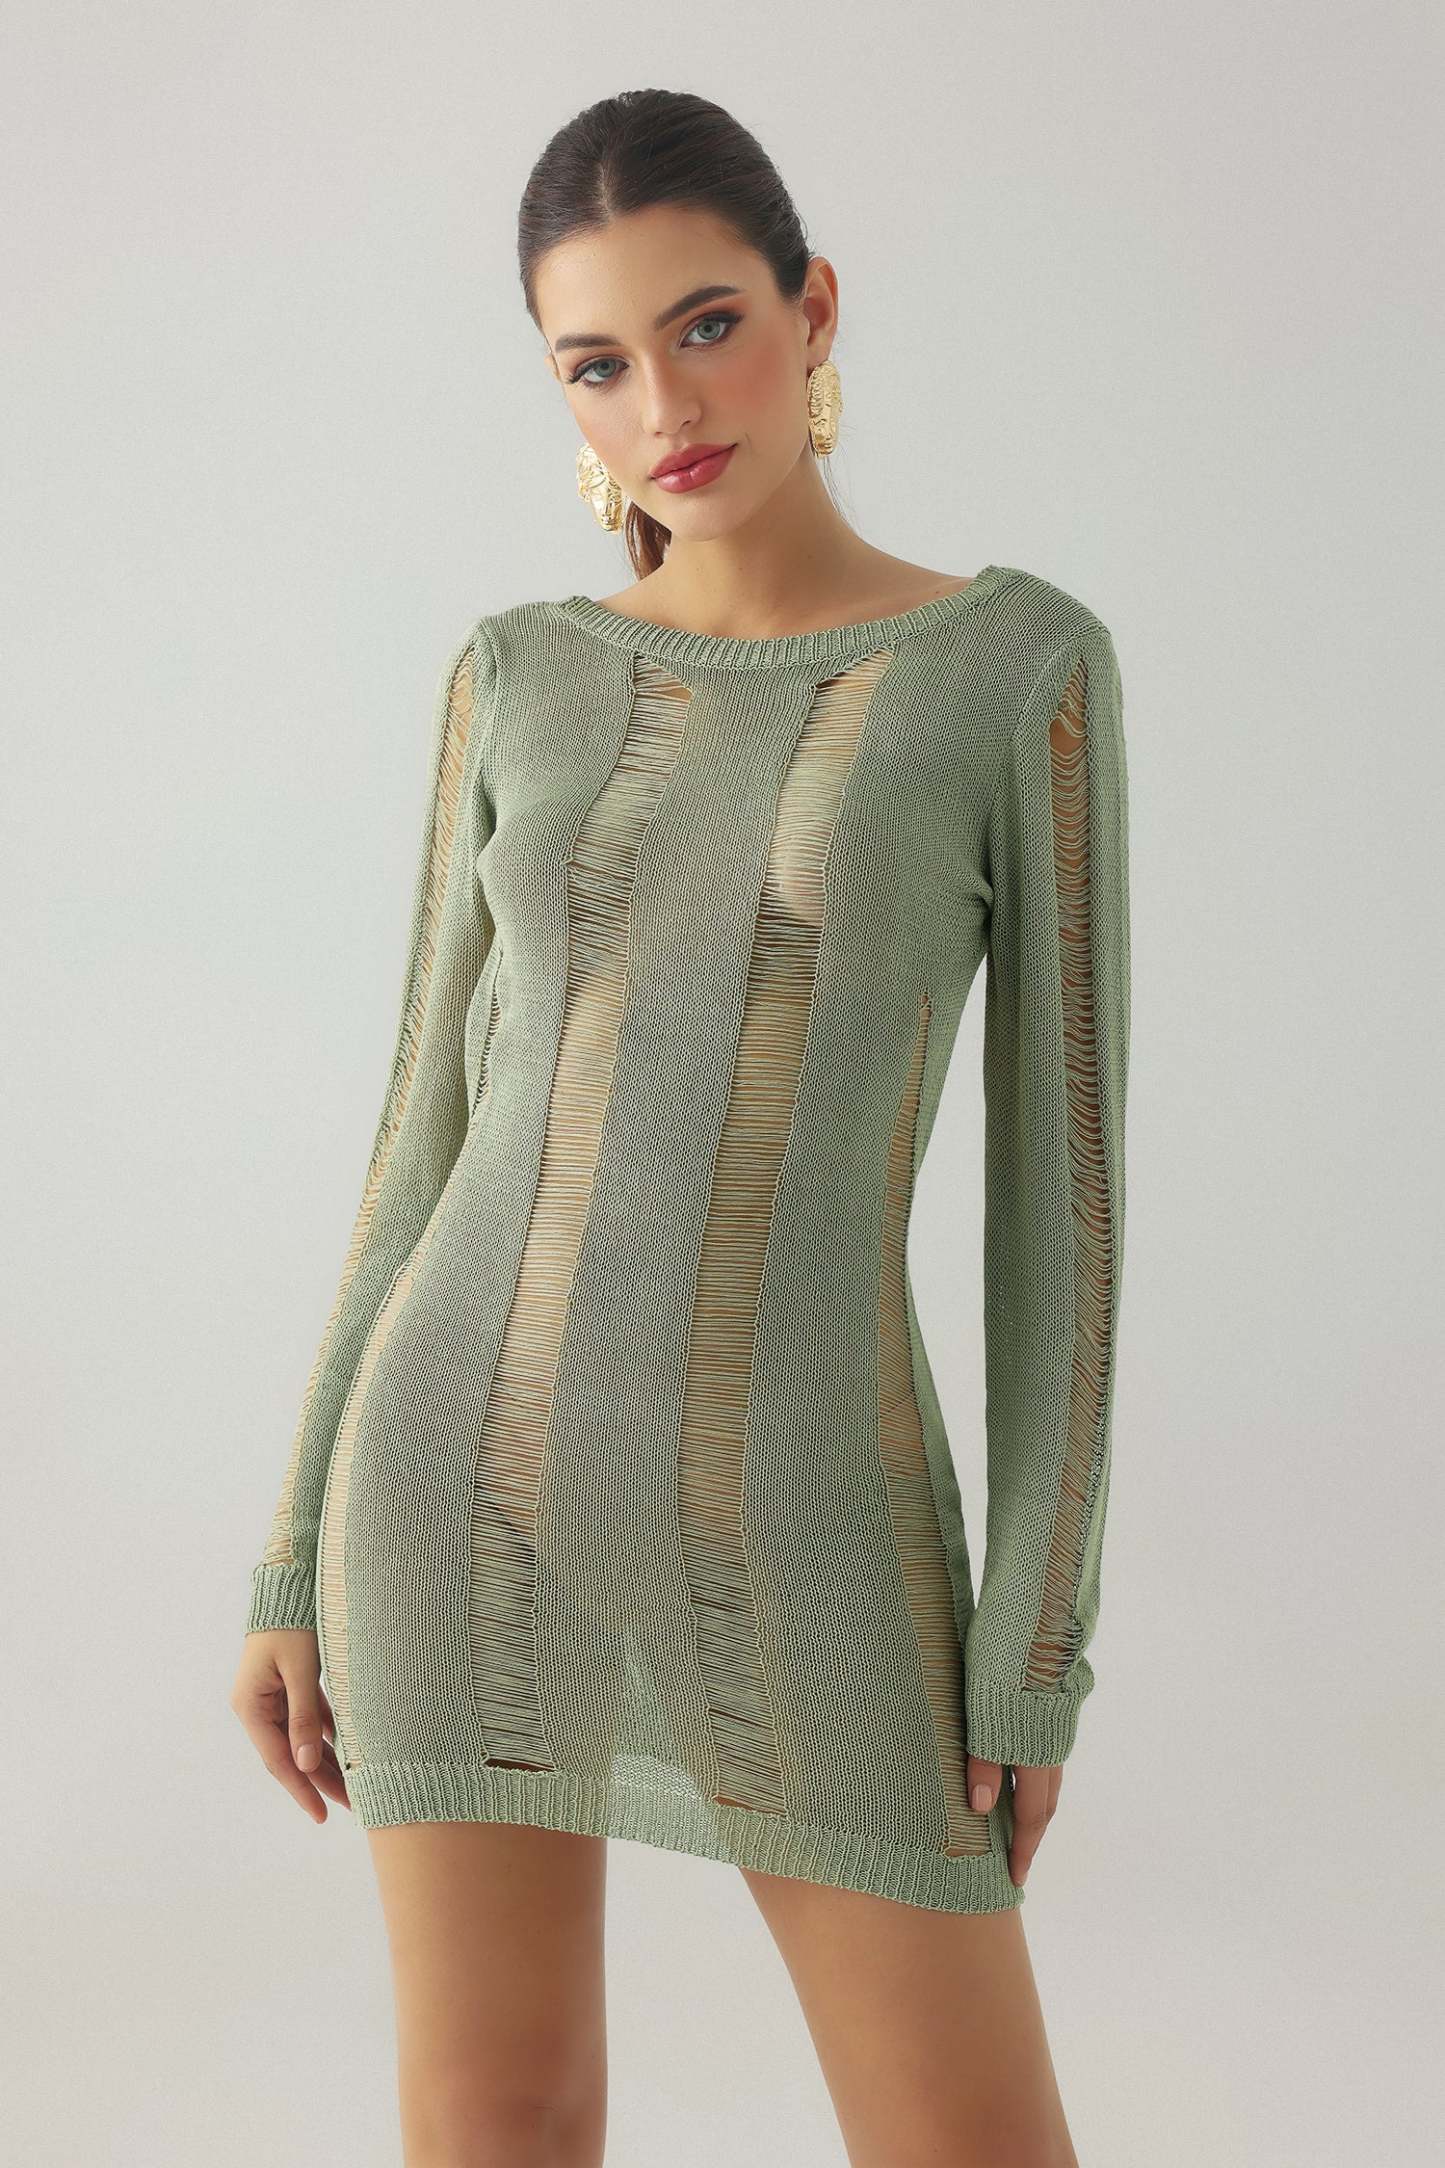 Kolia Backless Knitted Dress